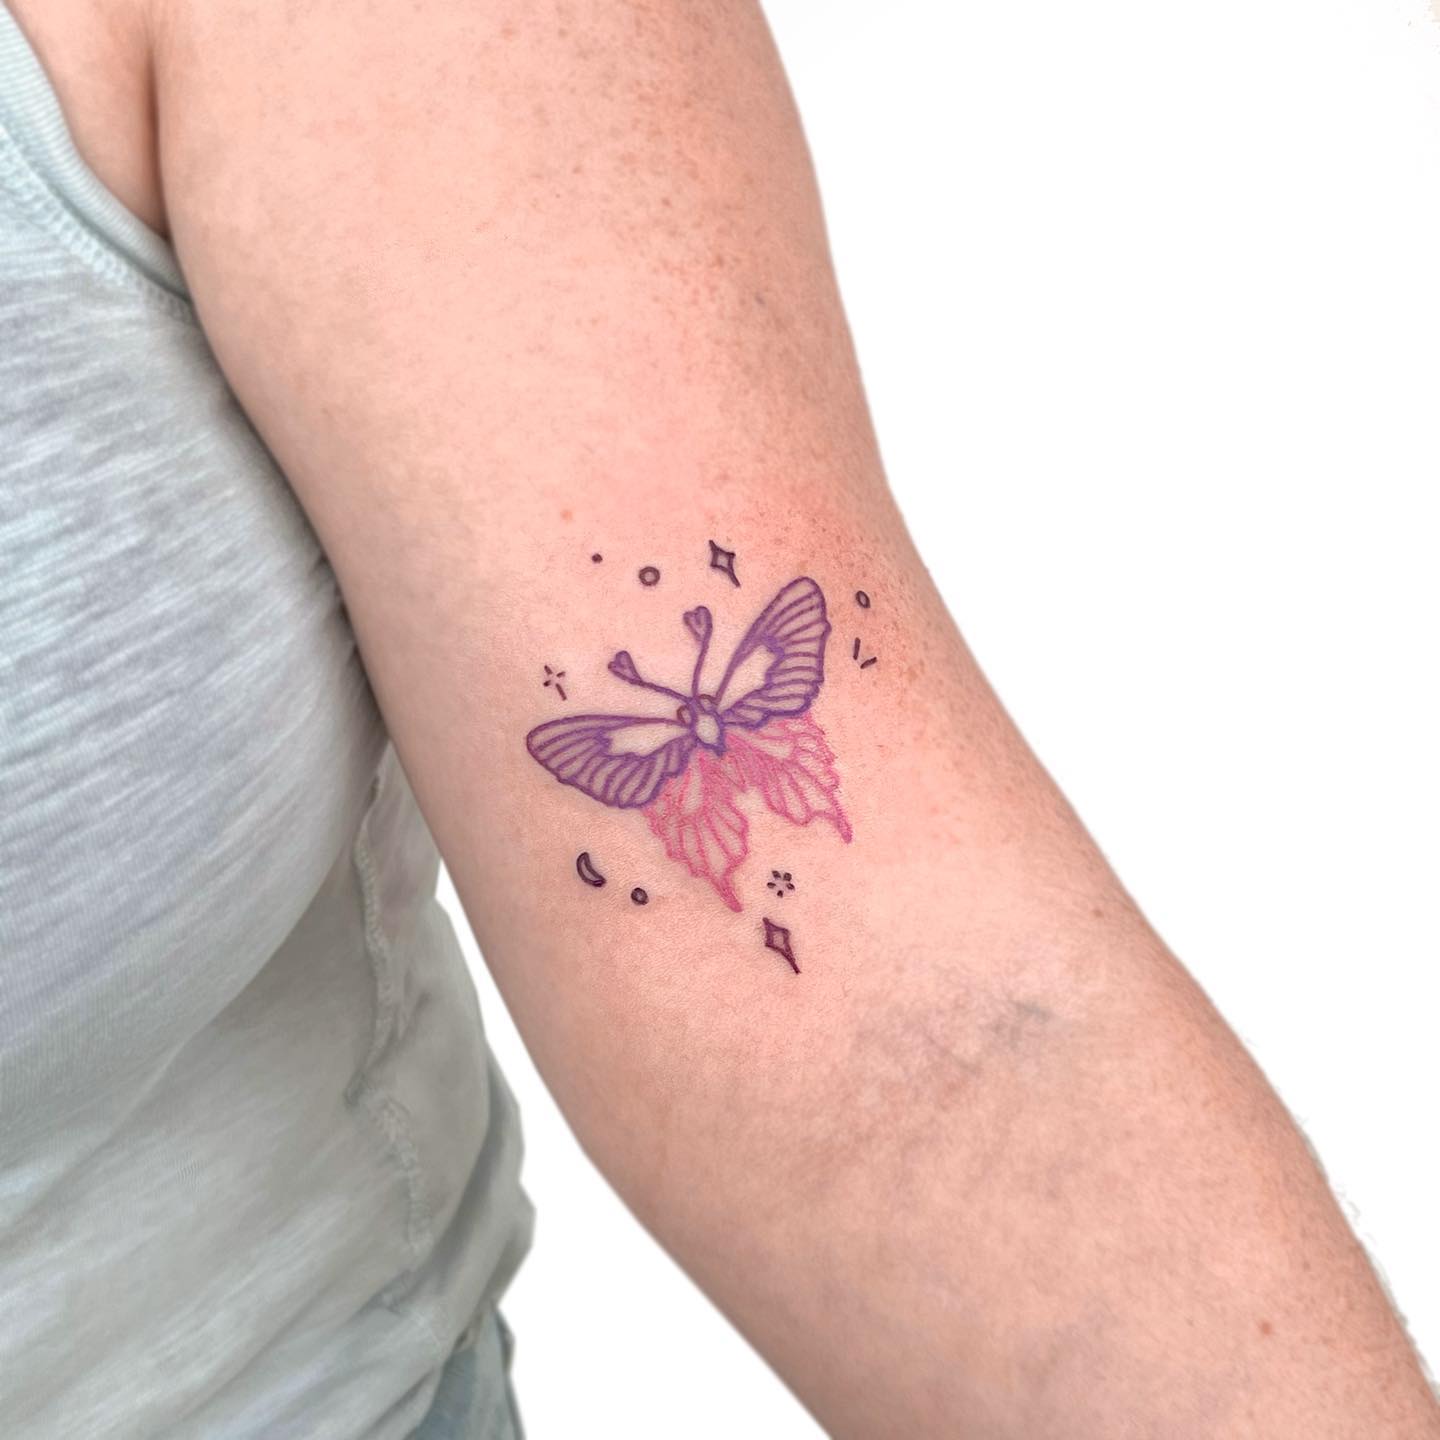 Tatuaje de mariposa en el brazo